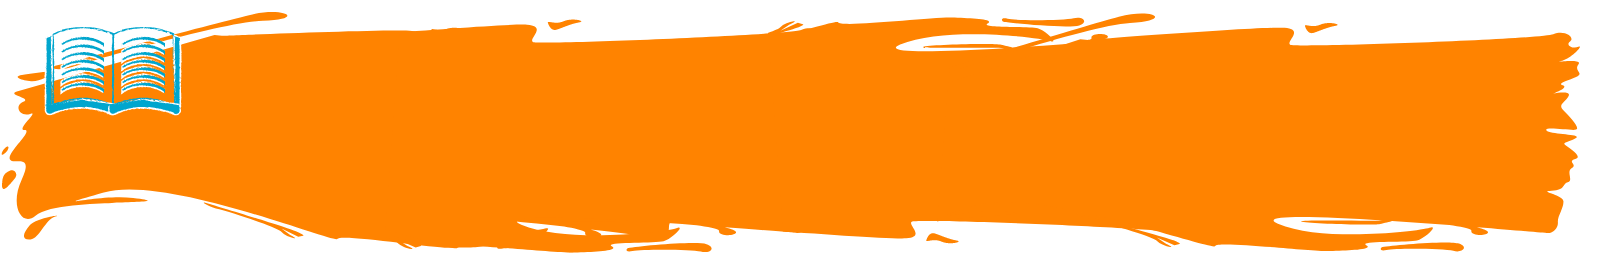 Orange Title Background Scribble